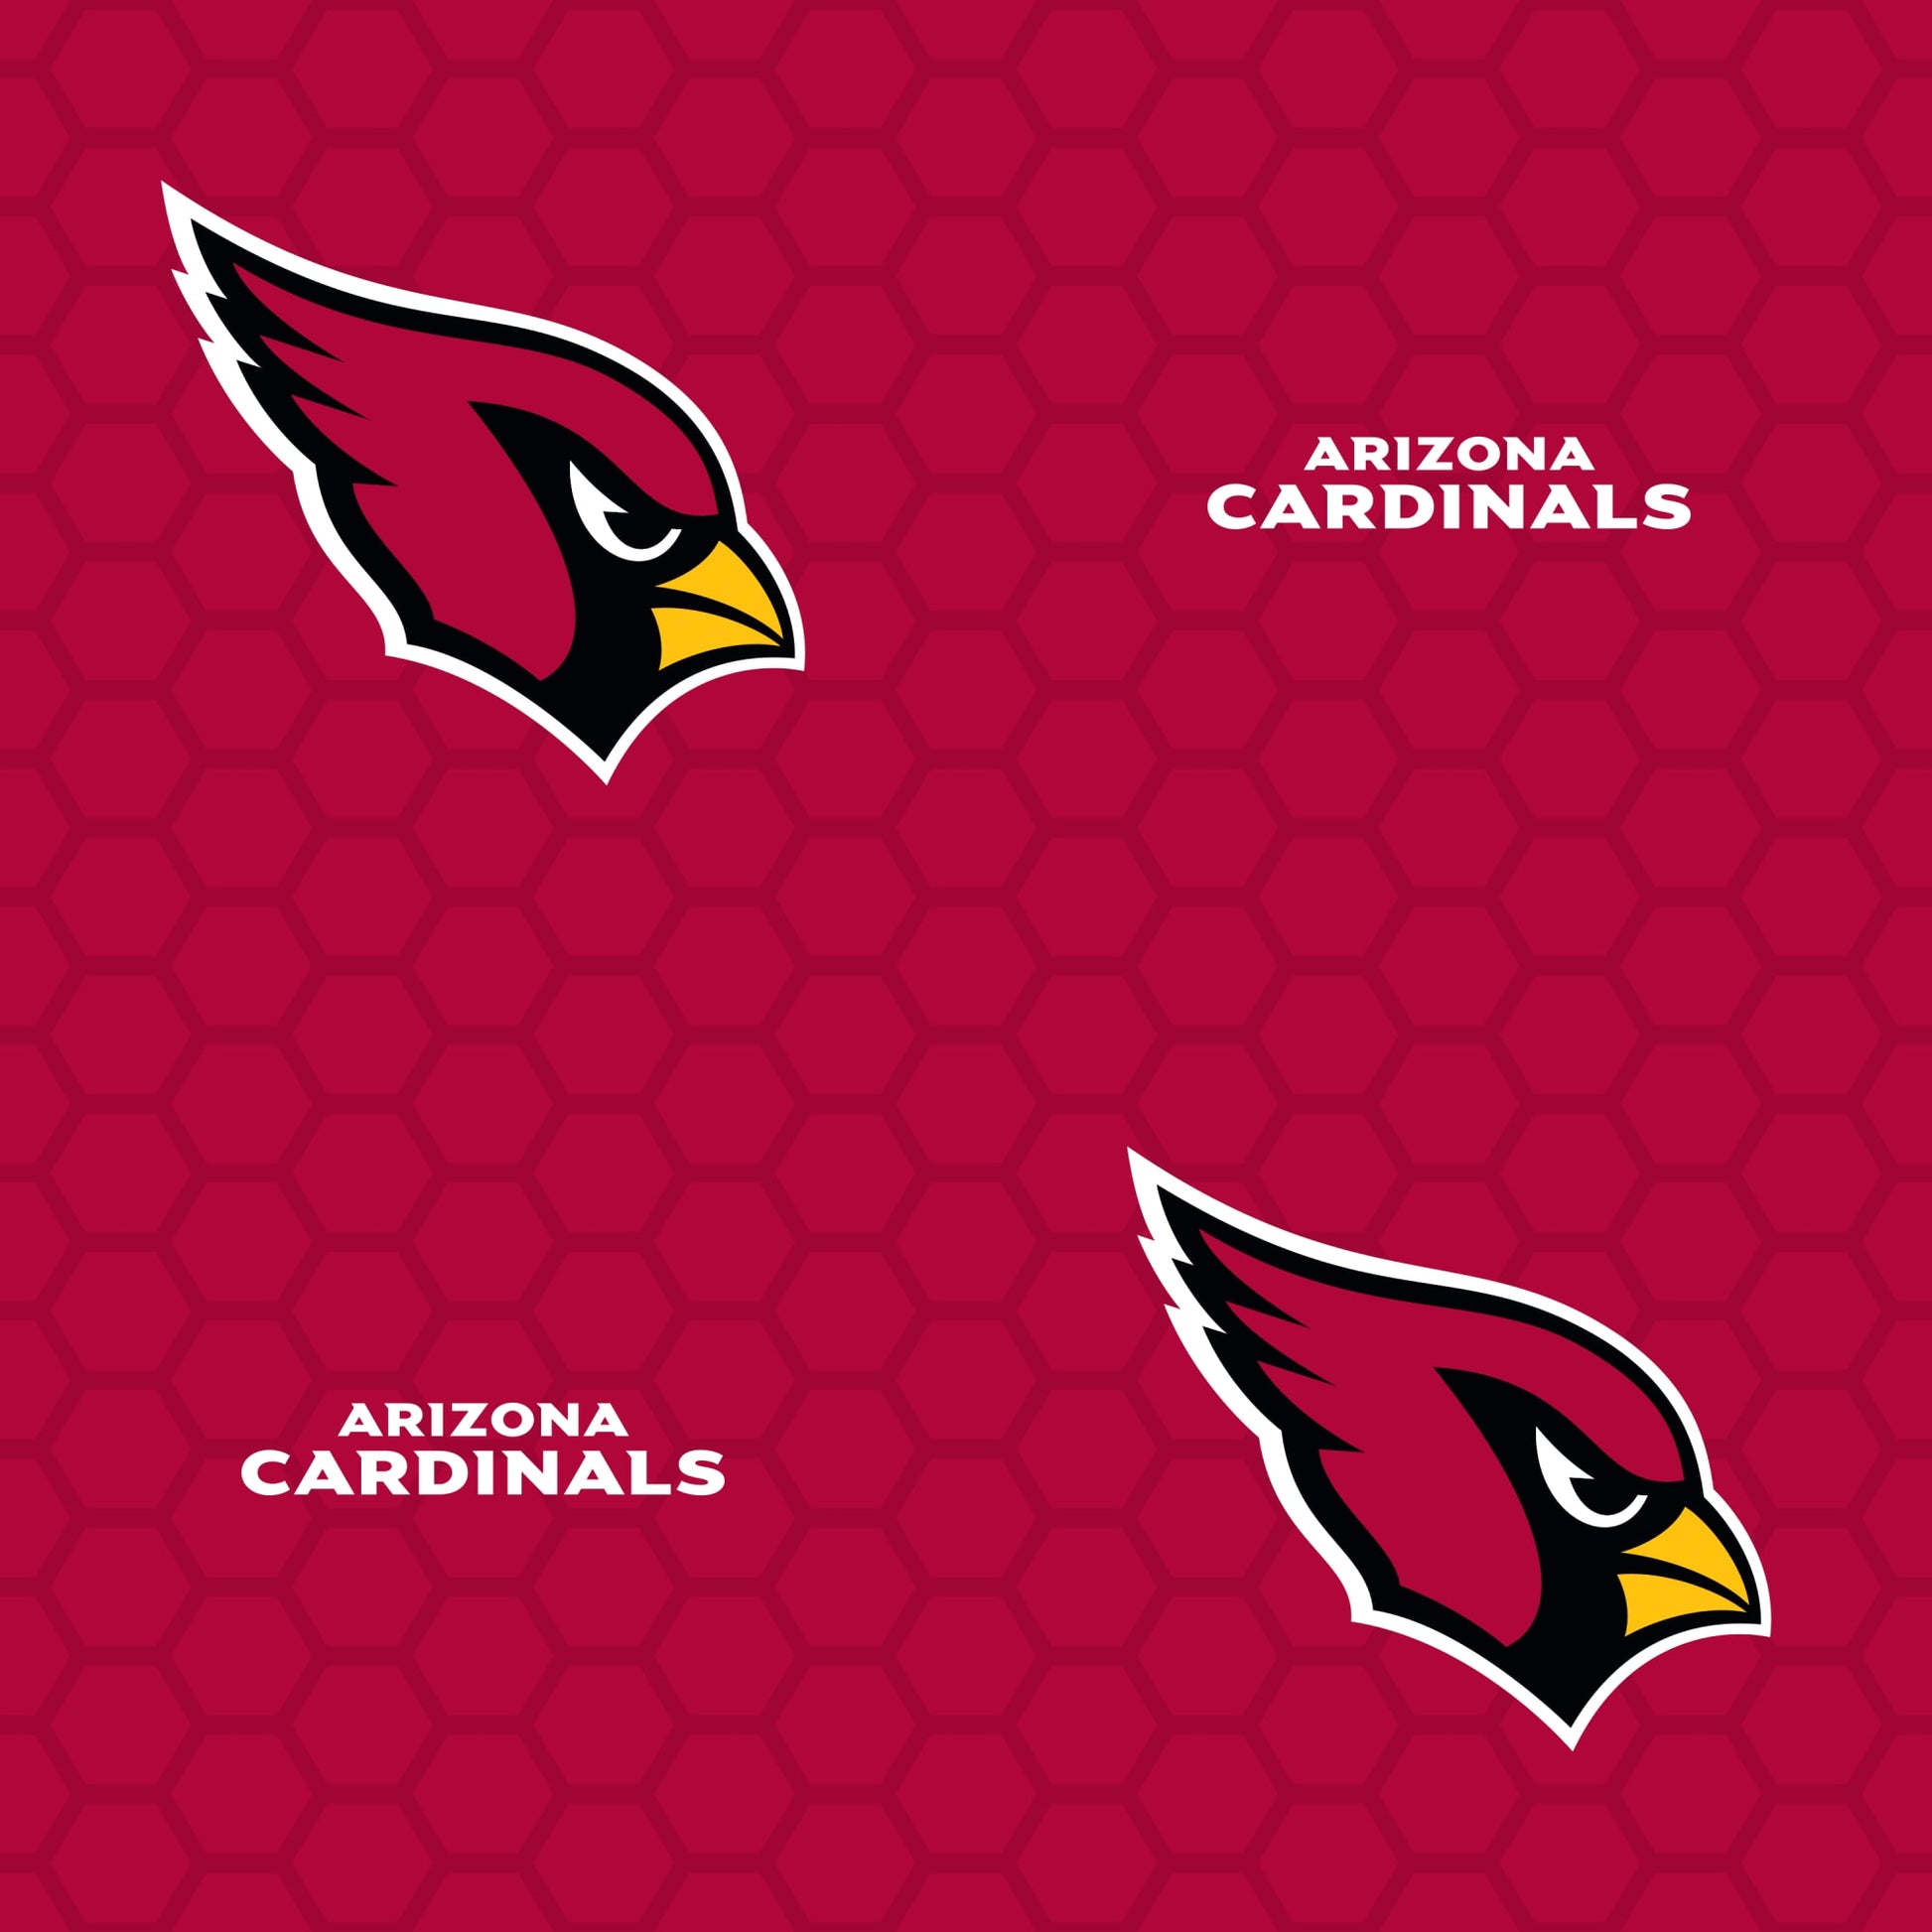 Atlanta Hawks Logo 10.5' L x 24 W Peel and Stick Wallpaper Roll Fathead Color: Red, NFL Team: Arizona Cardinals